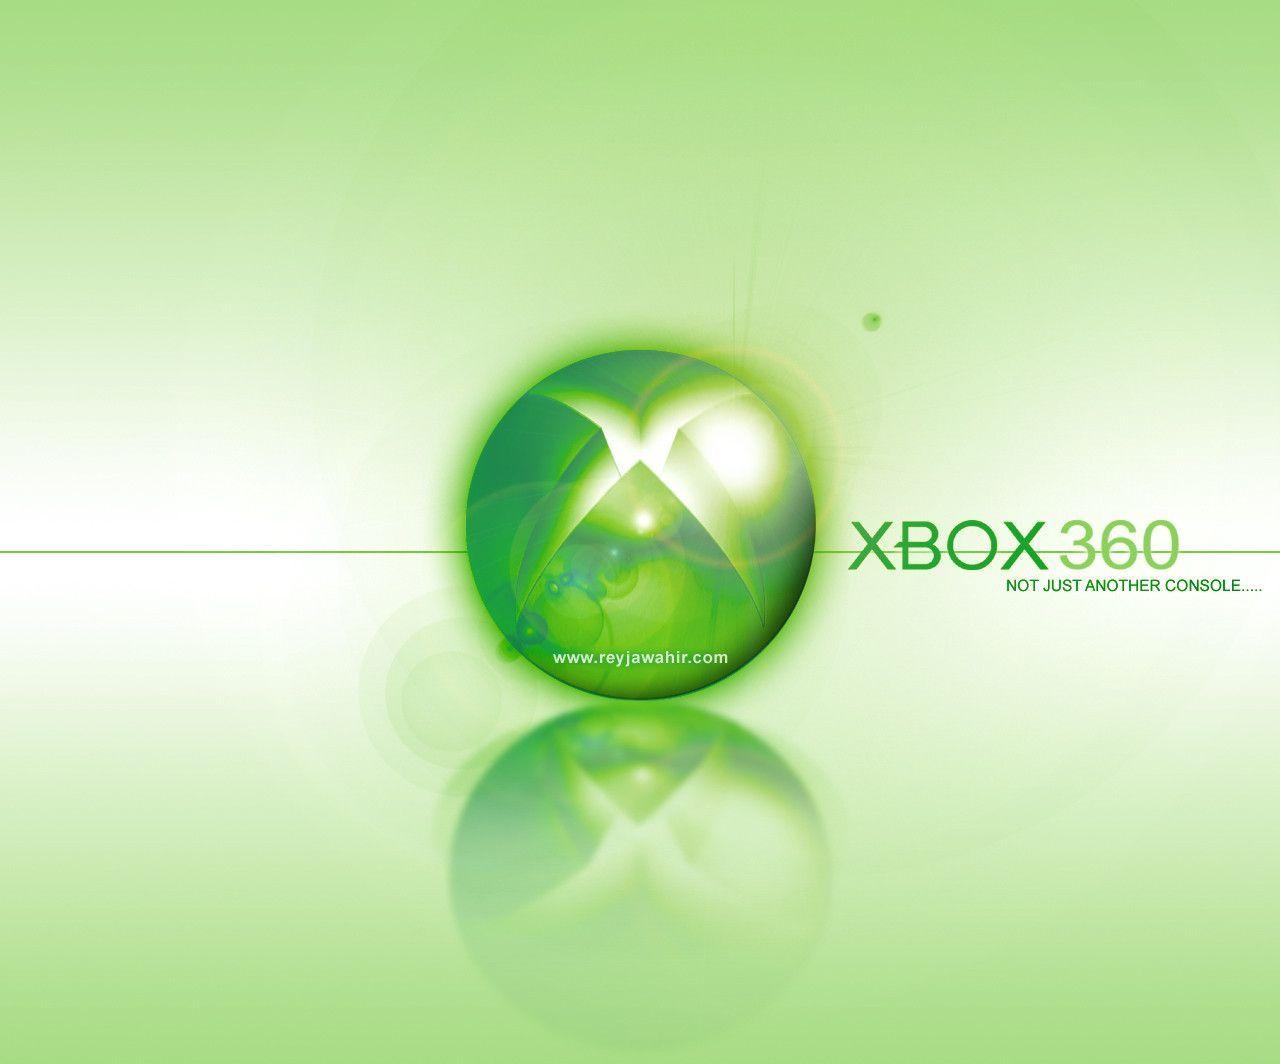 Wallpaper For > Xbox 360 Wallpaper HD